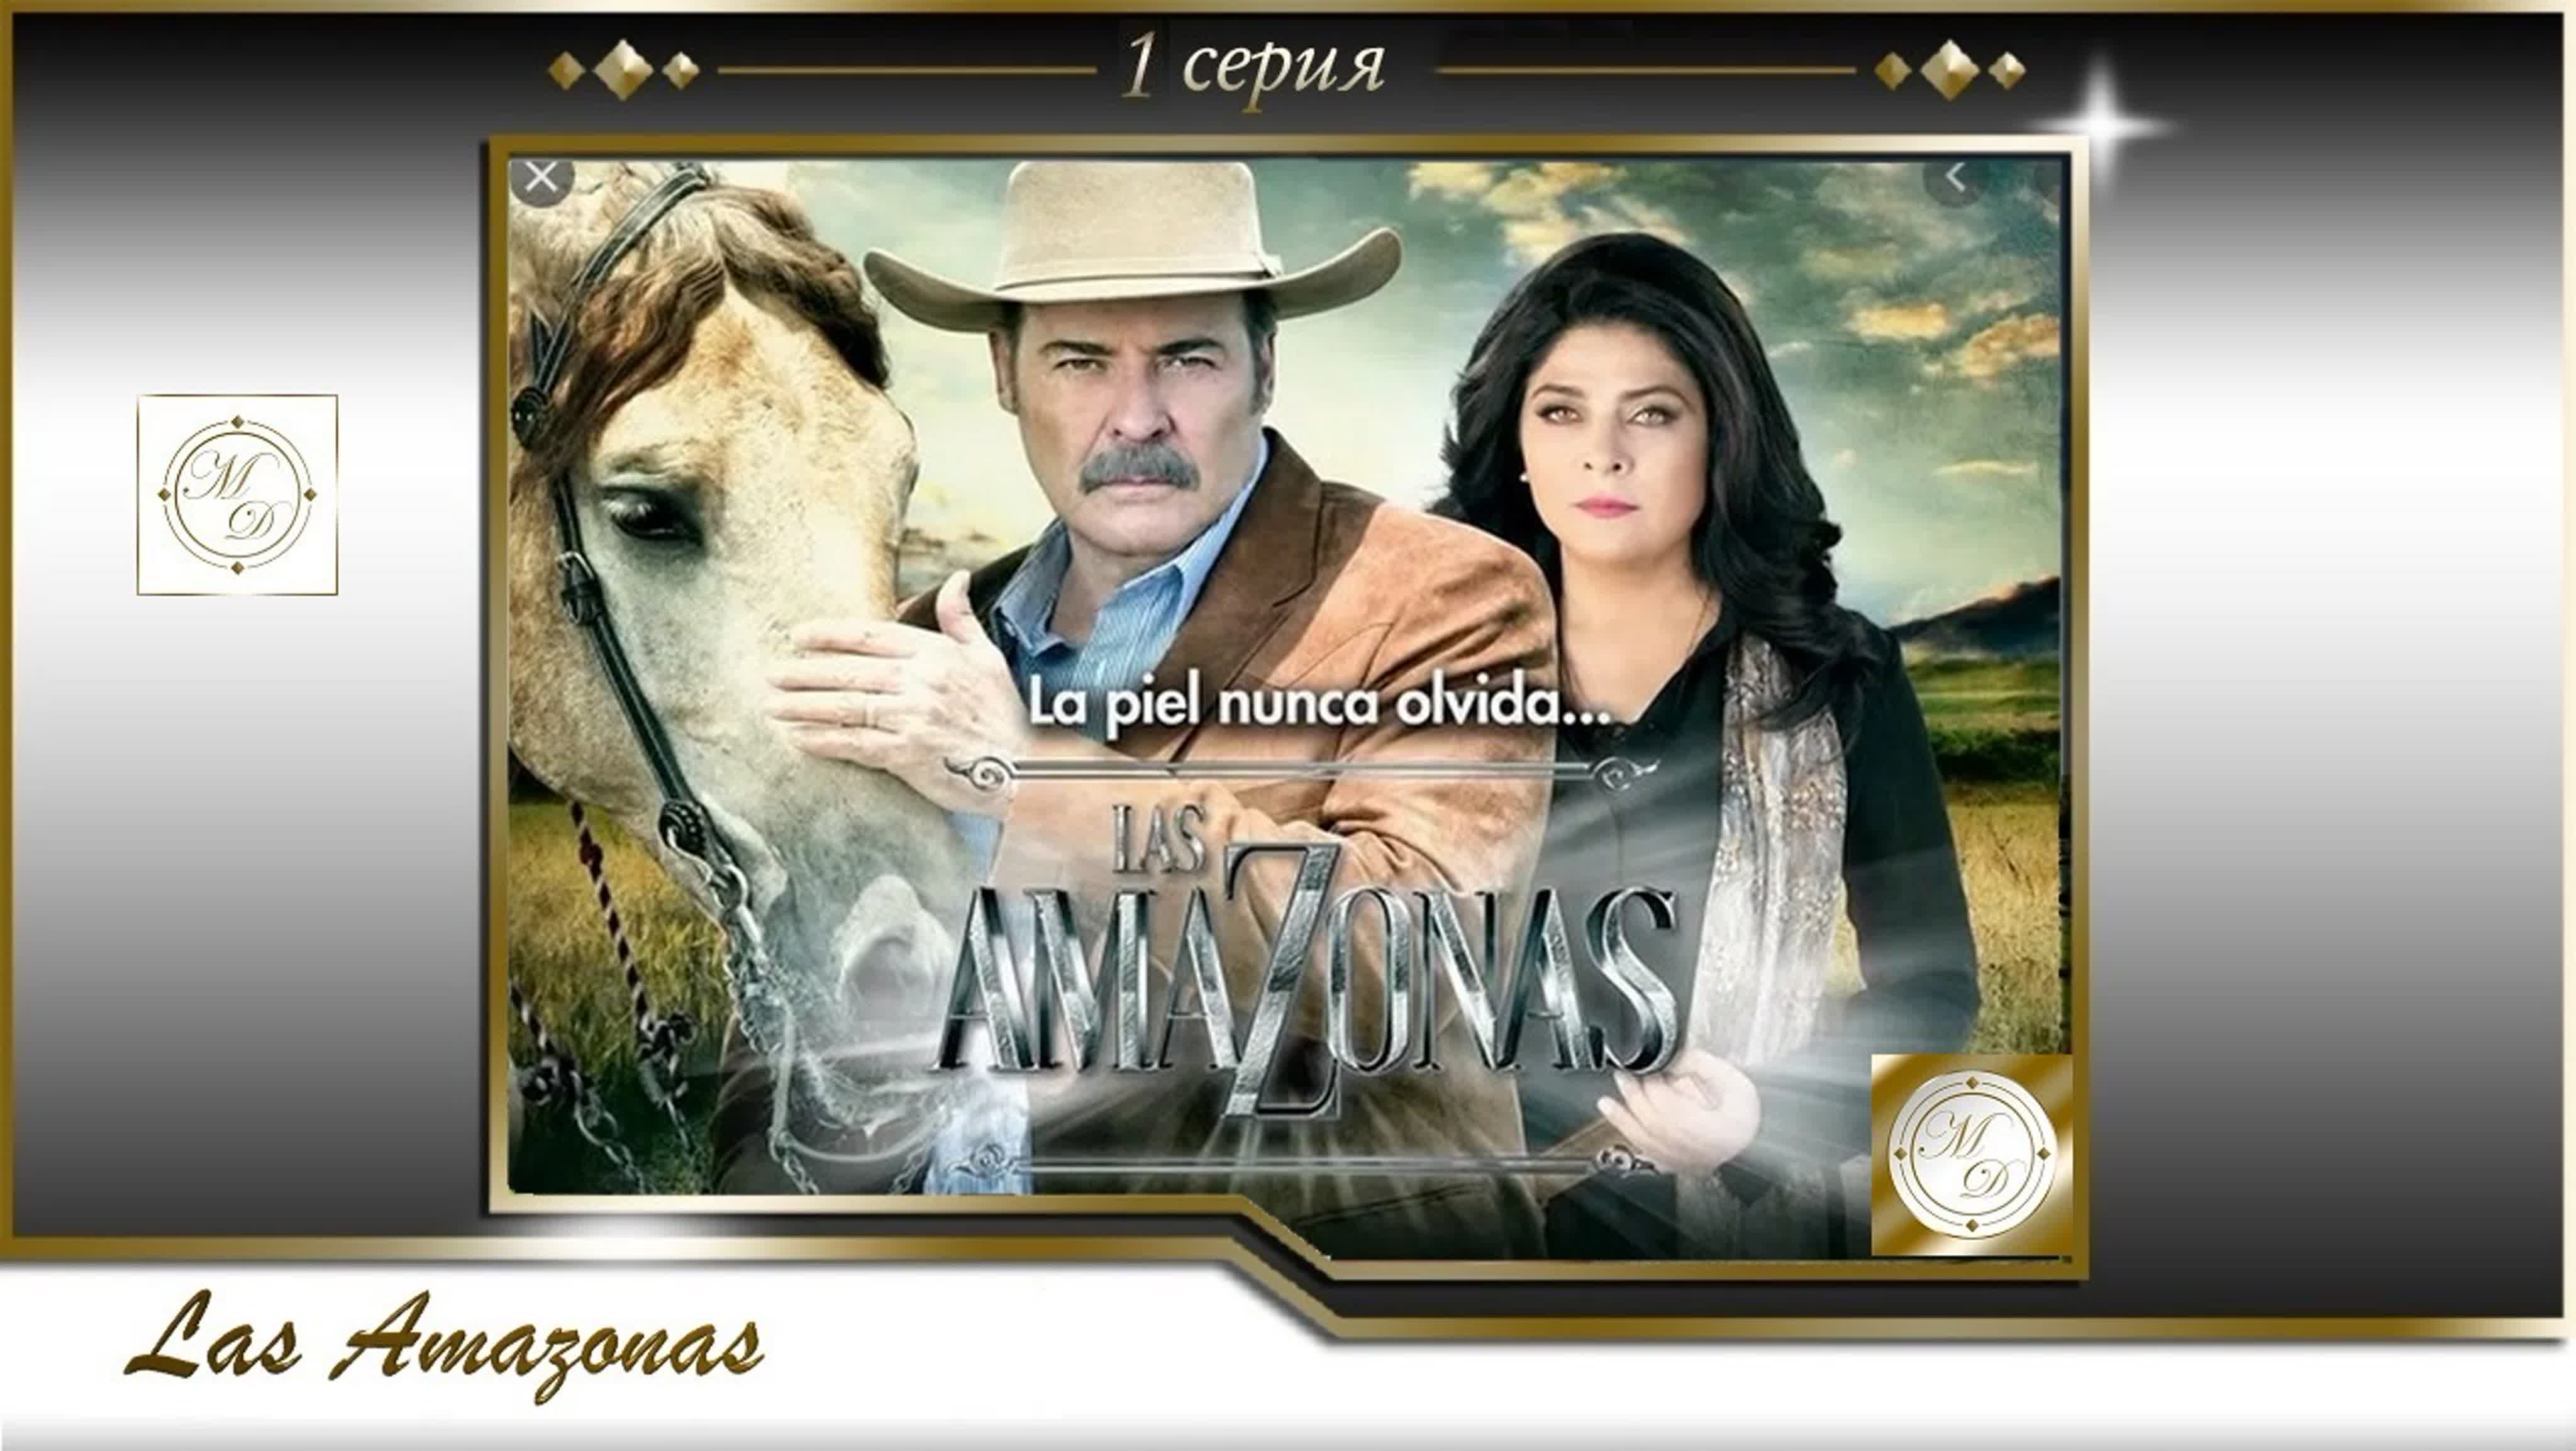 Las amazonas (Televisa 2016)